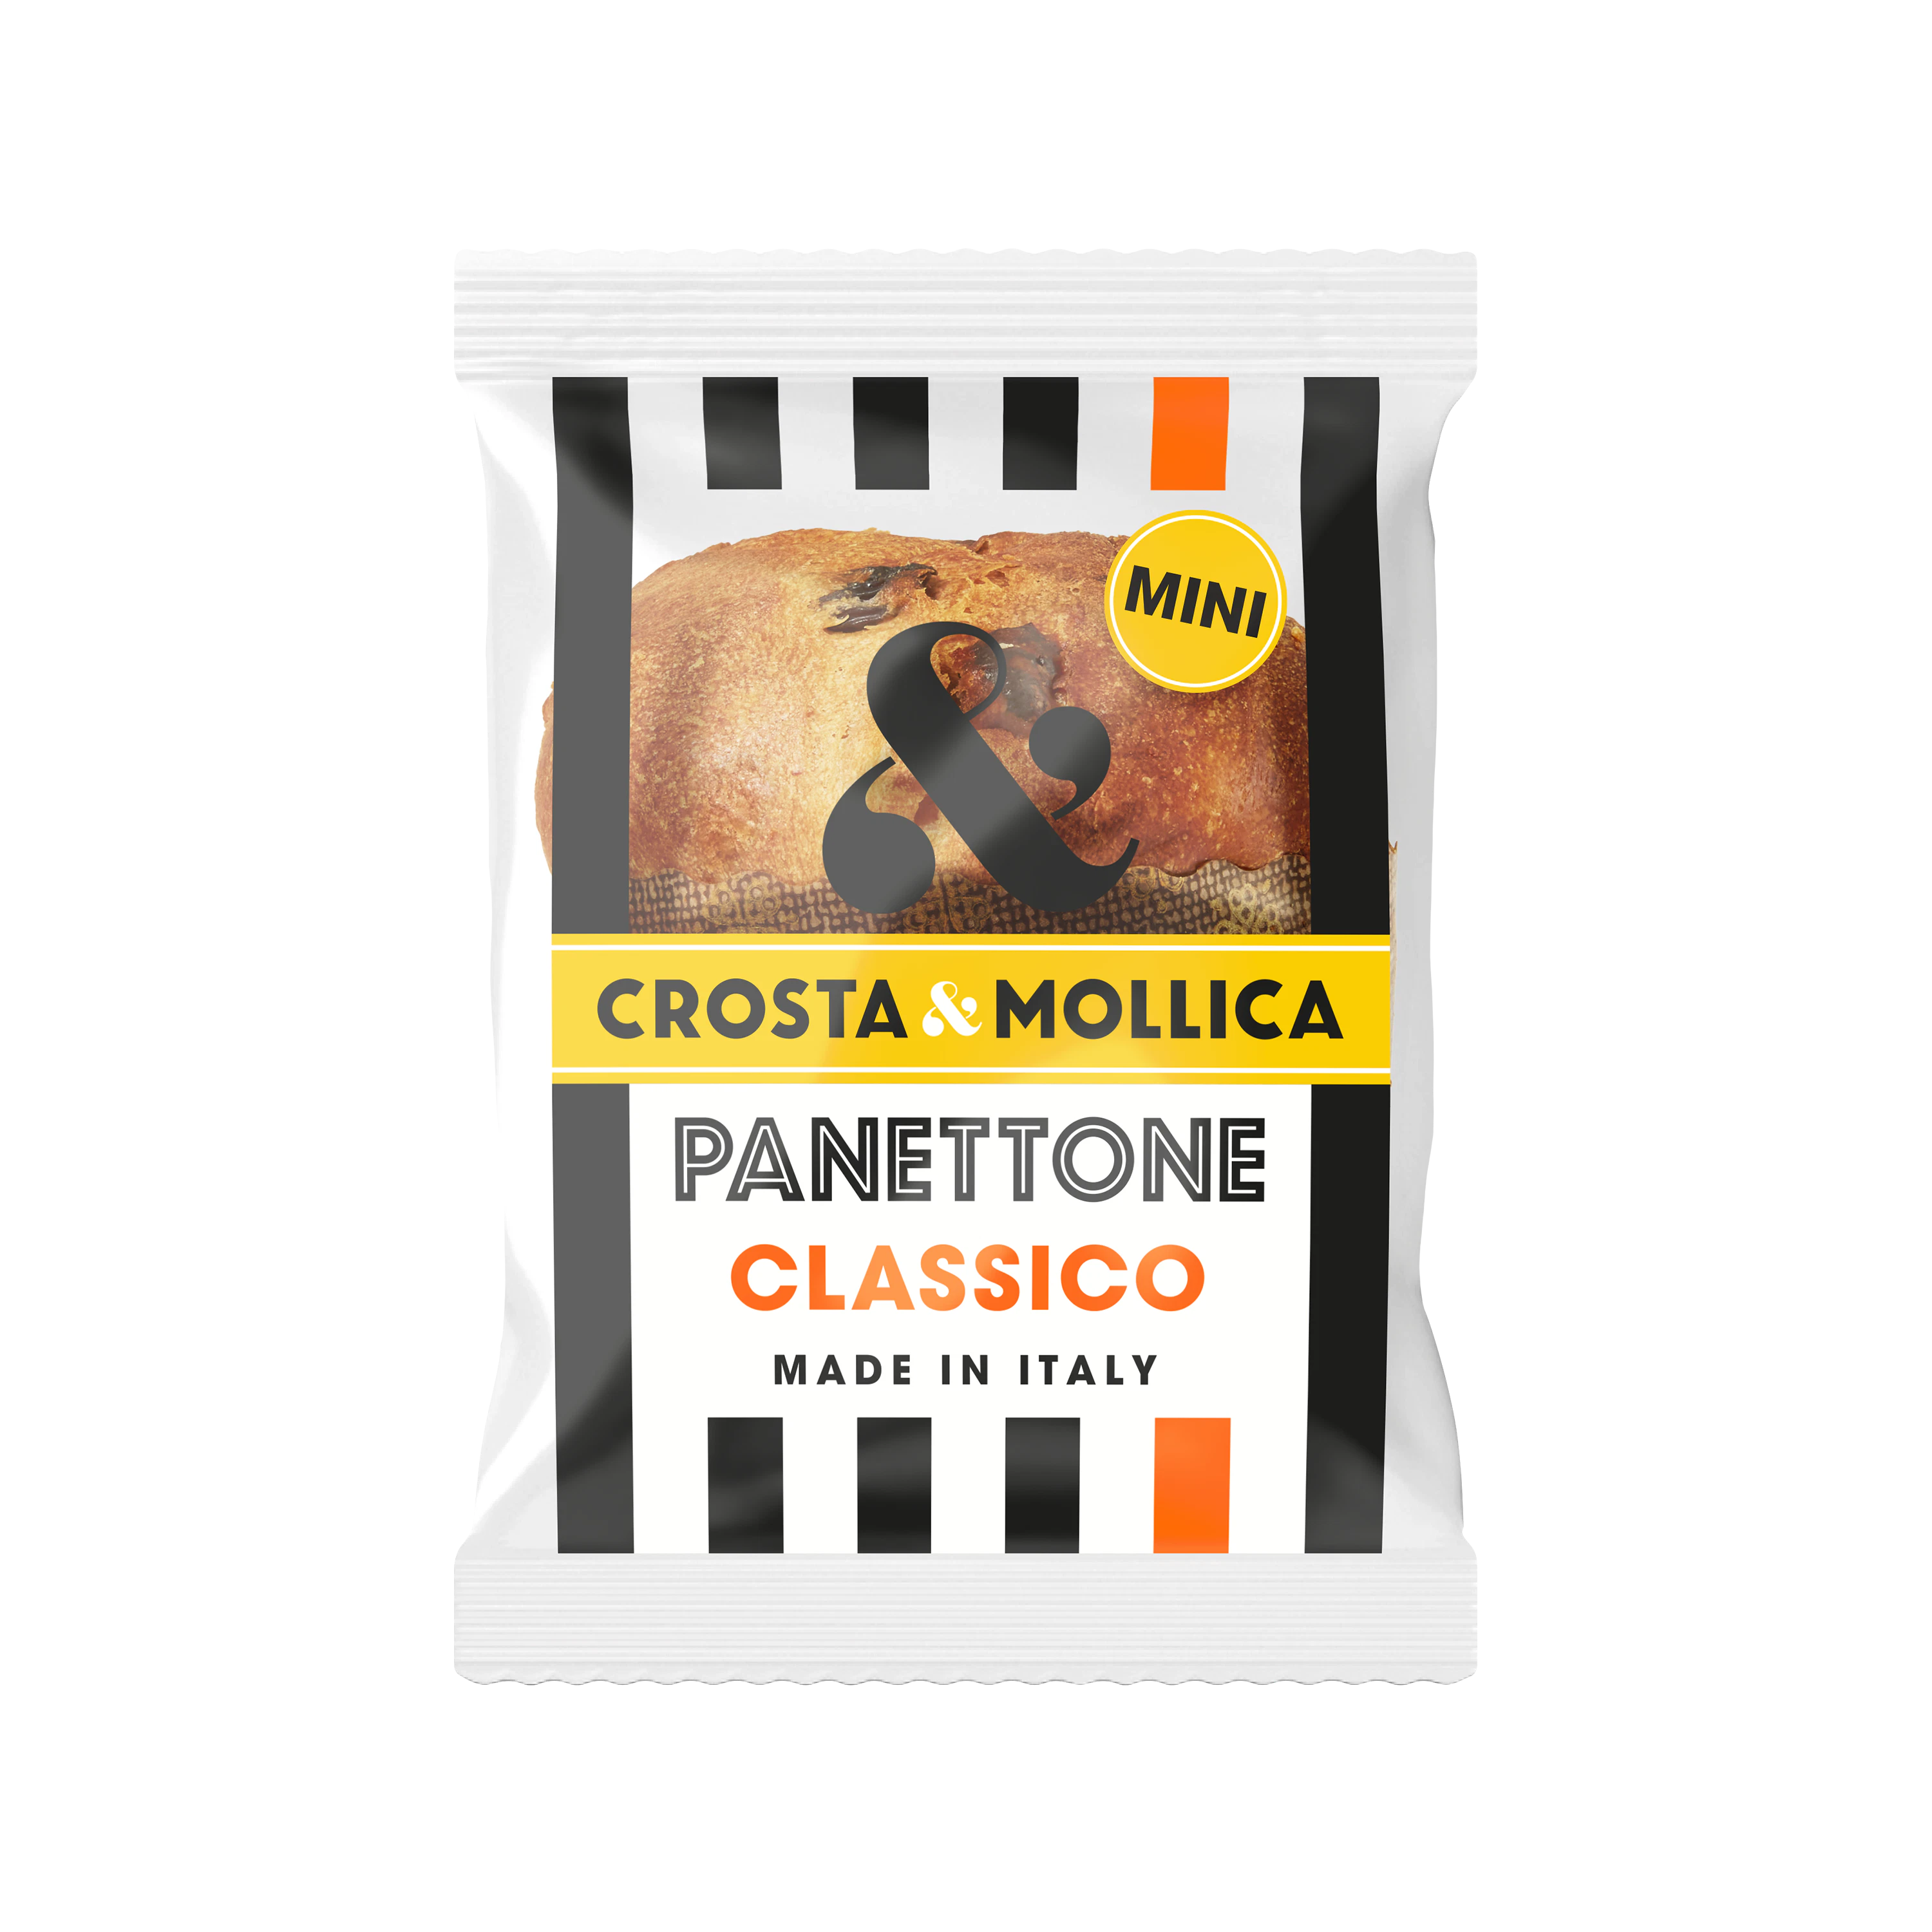 Mini Panettone Classico packaging.